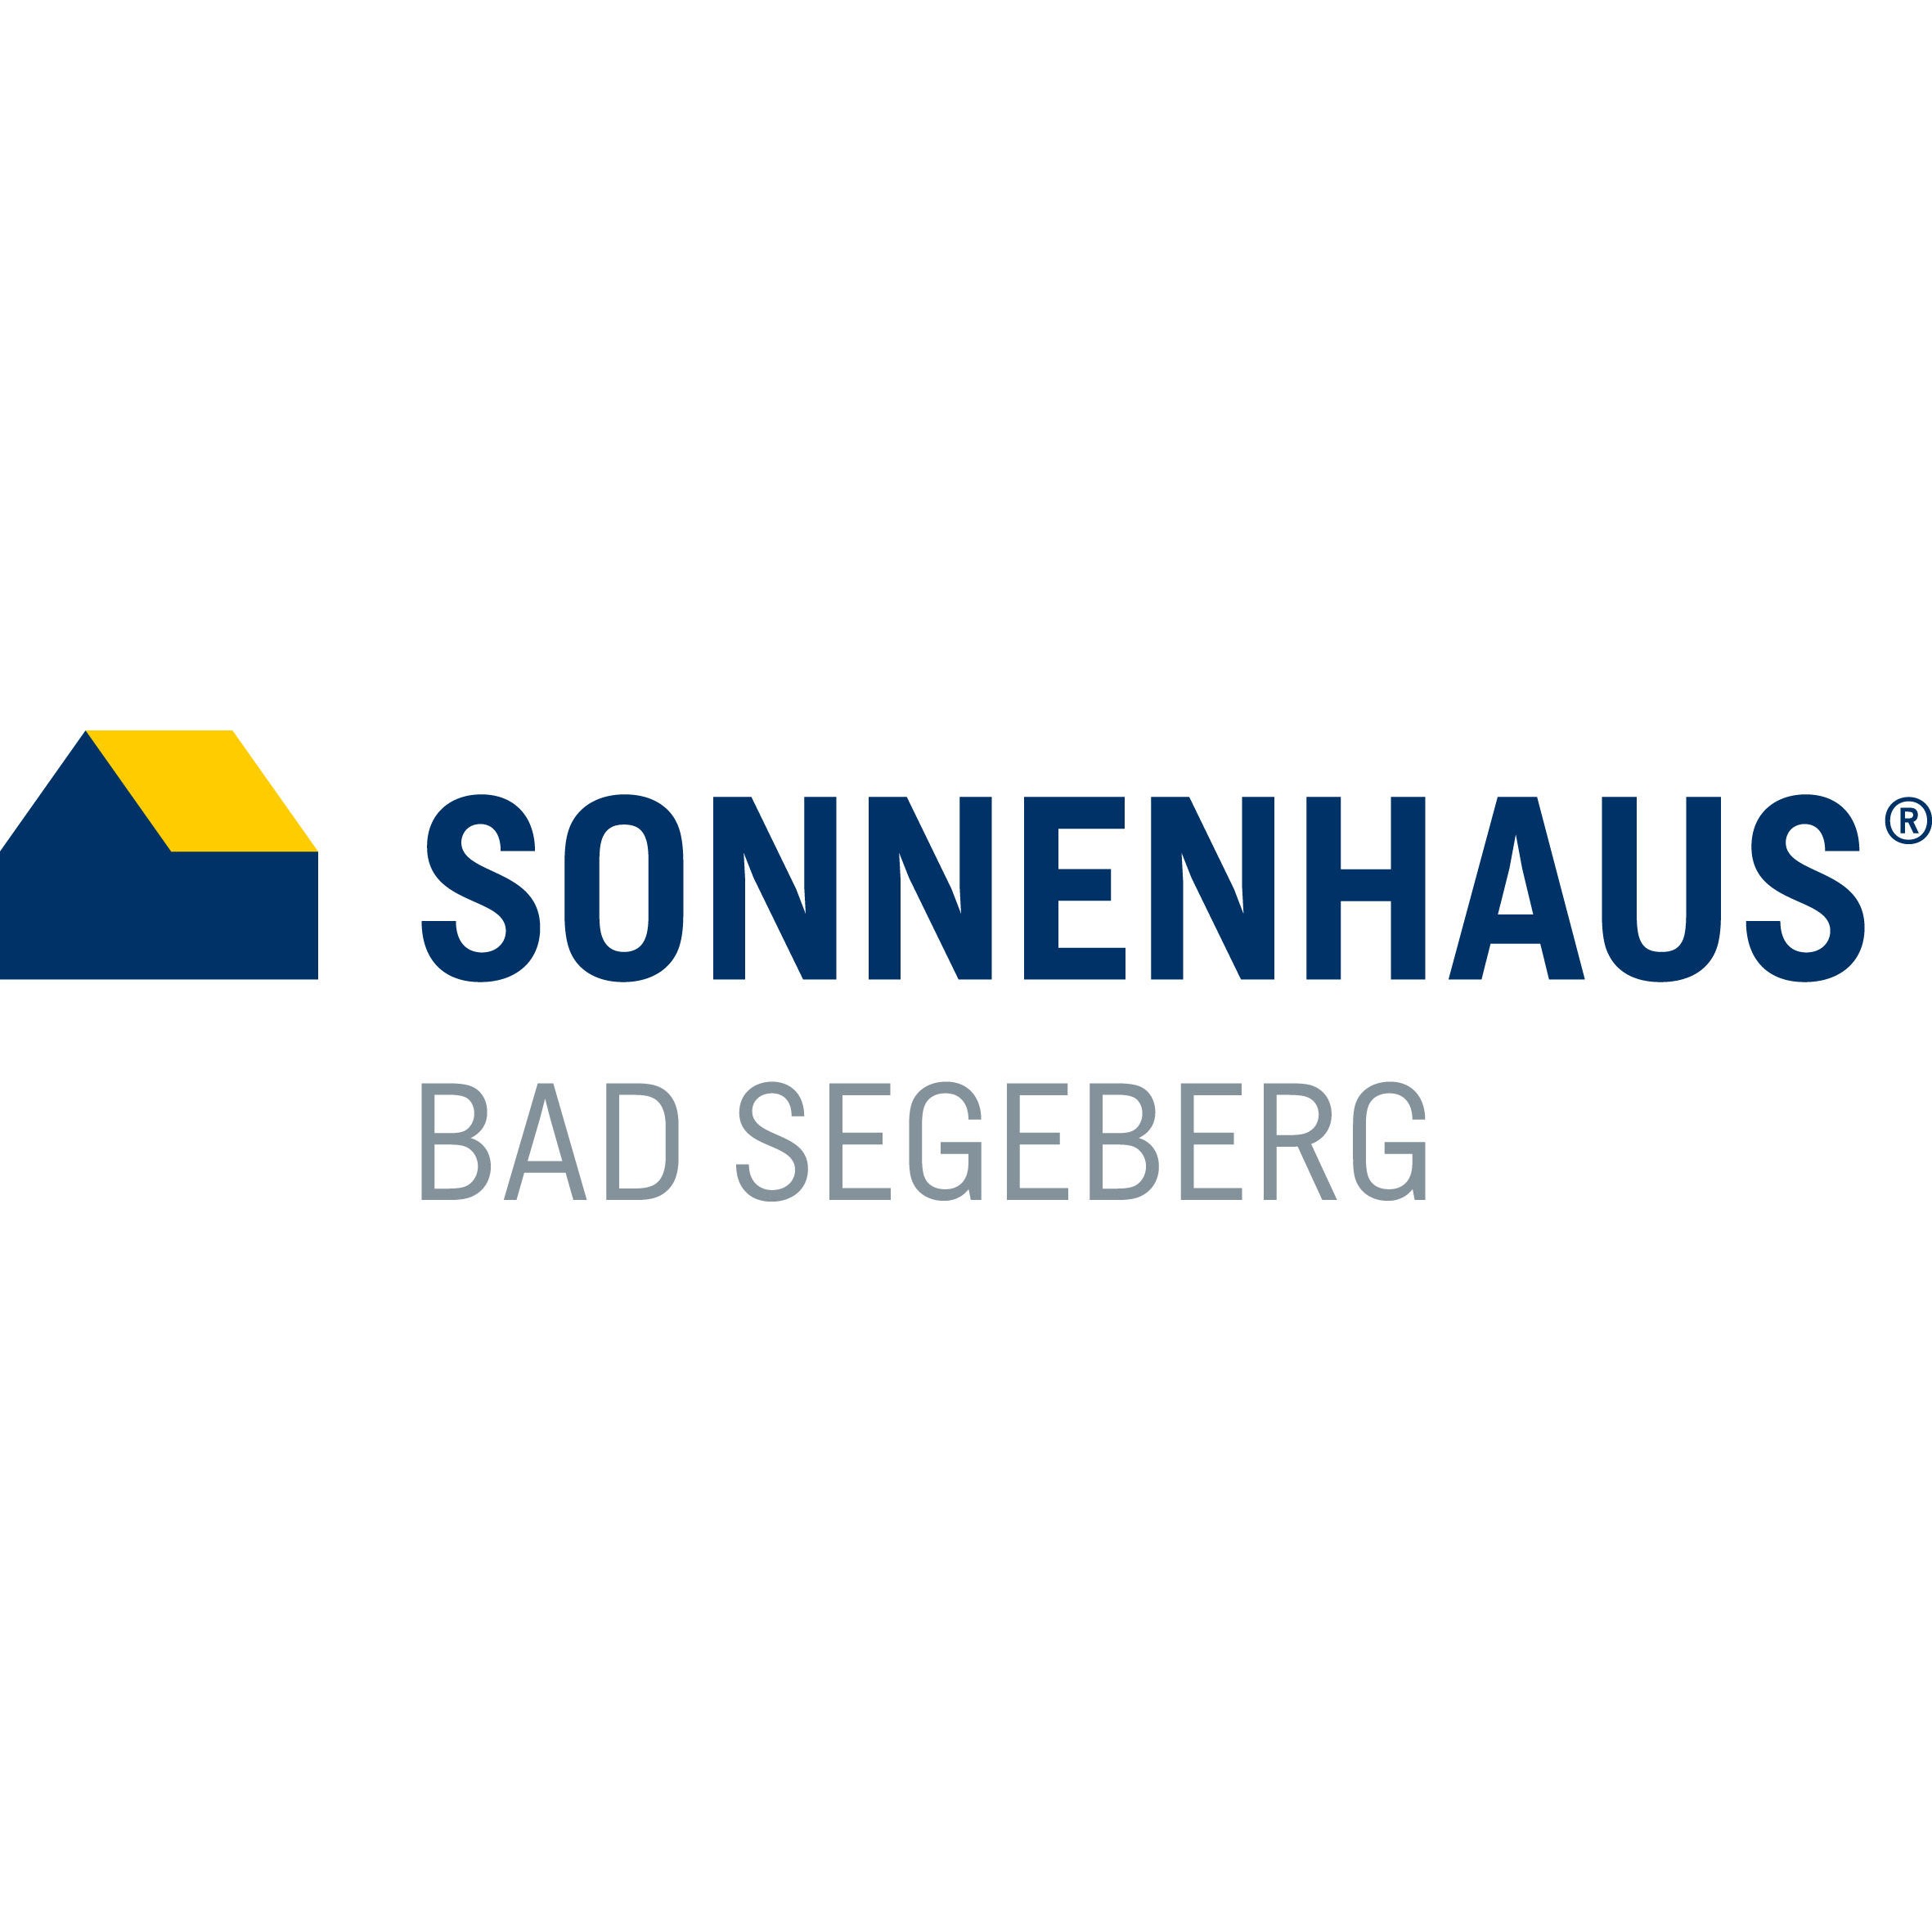 Sonnenhaus Bad Segewerk e.K. Harald Jürgensen Logo